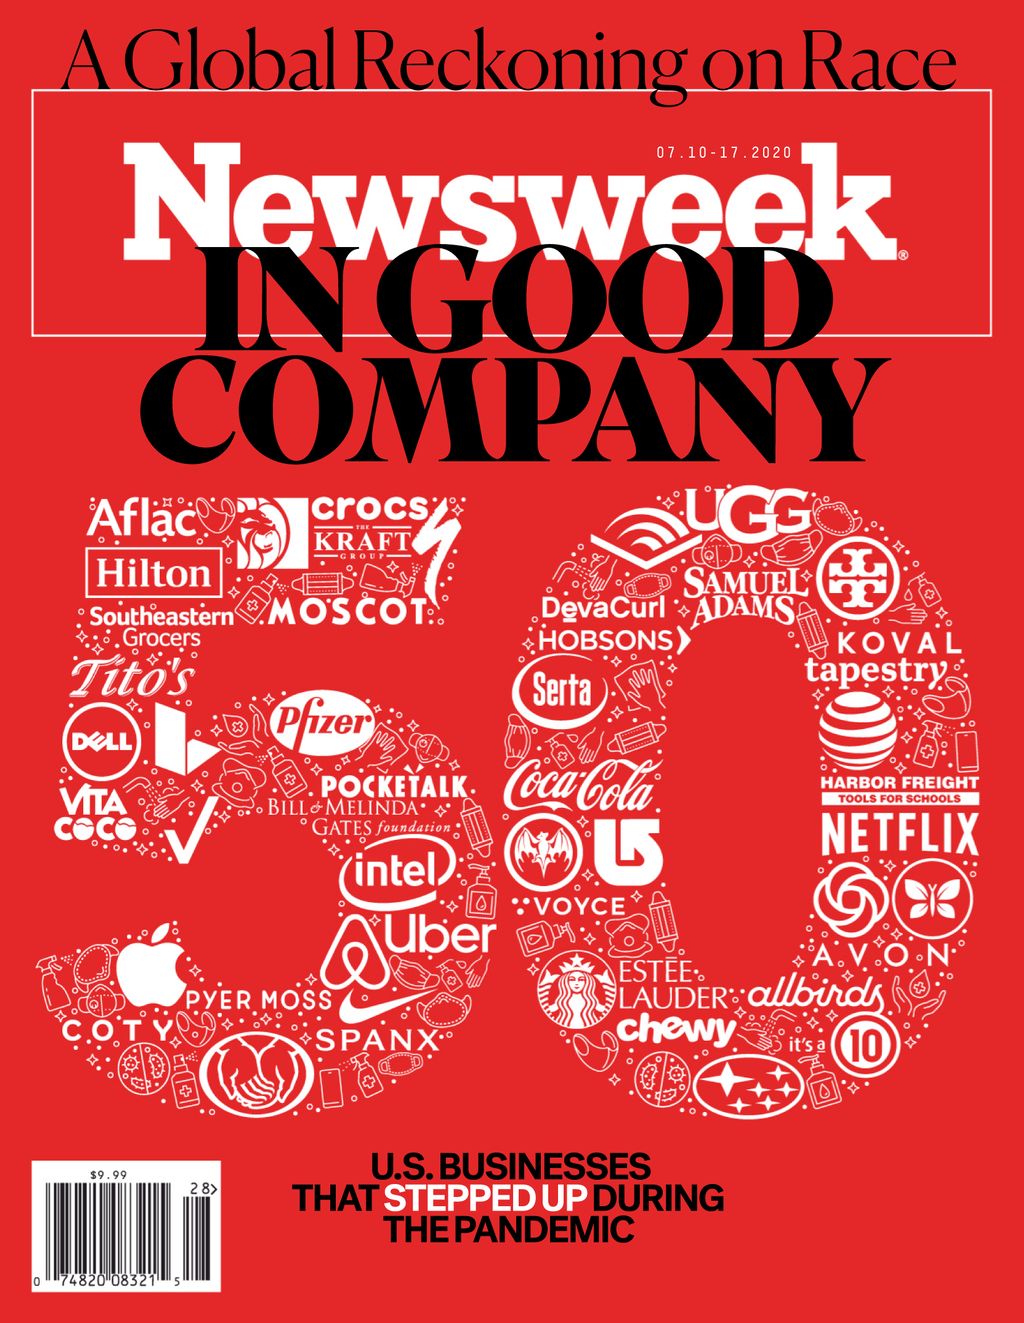 Newsweek Magazine